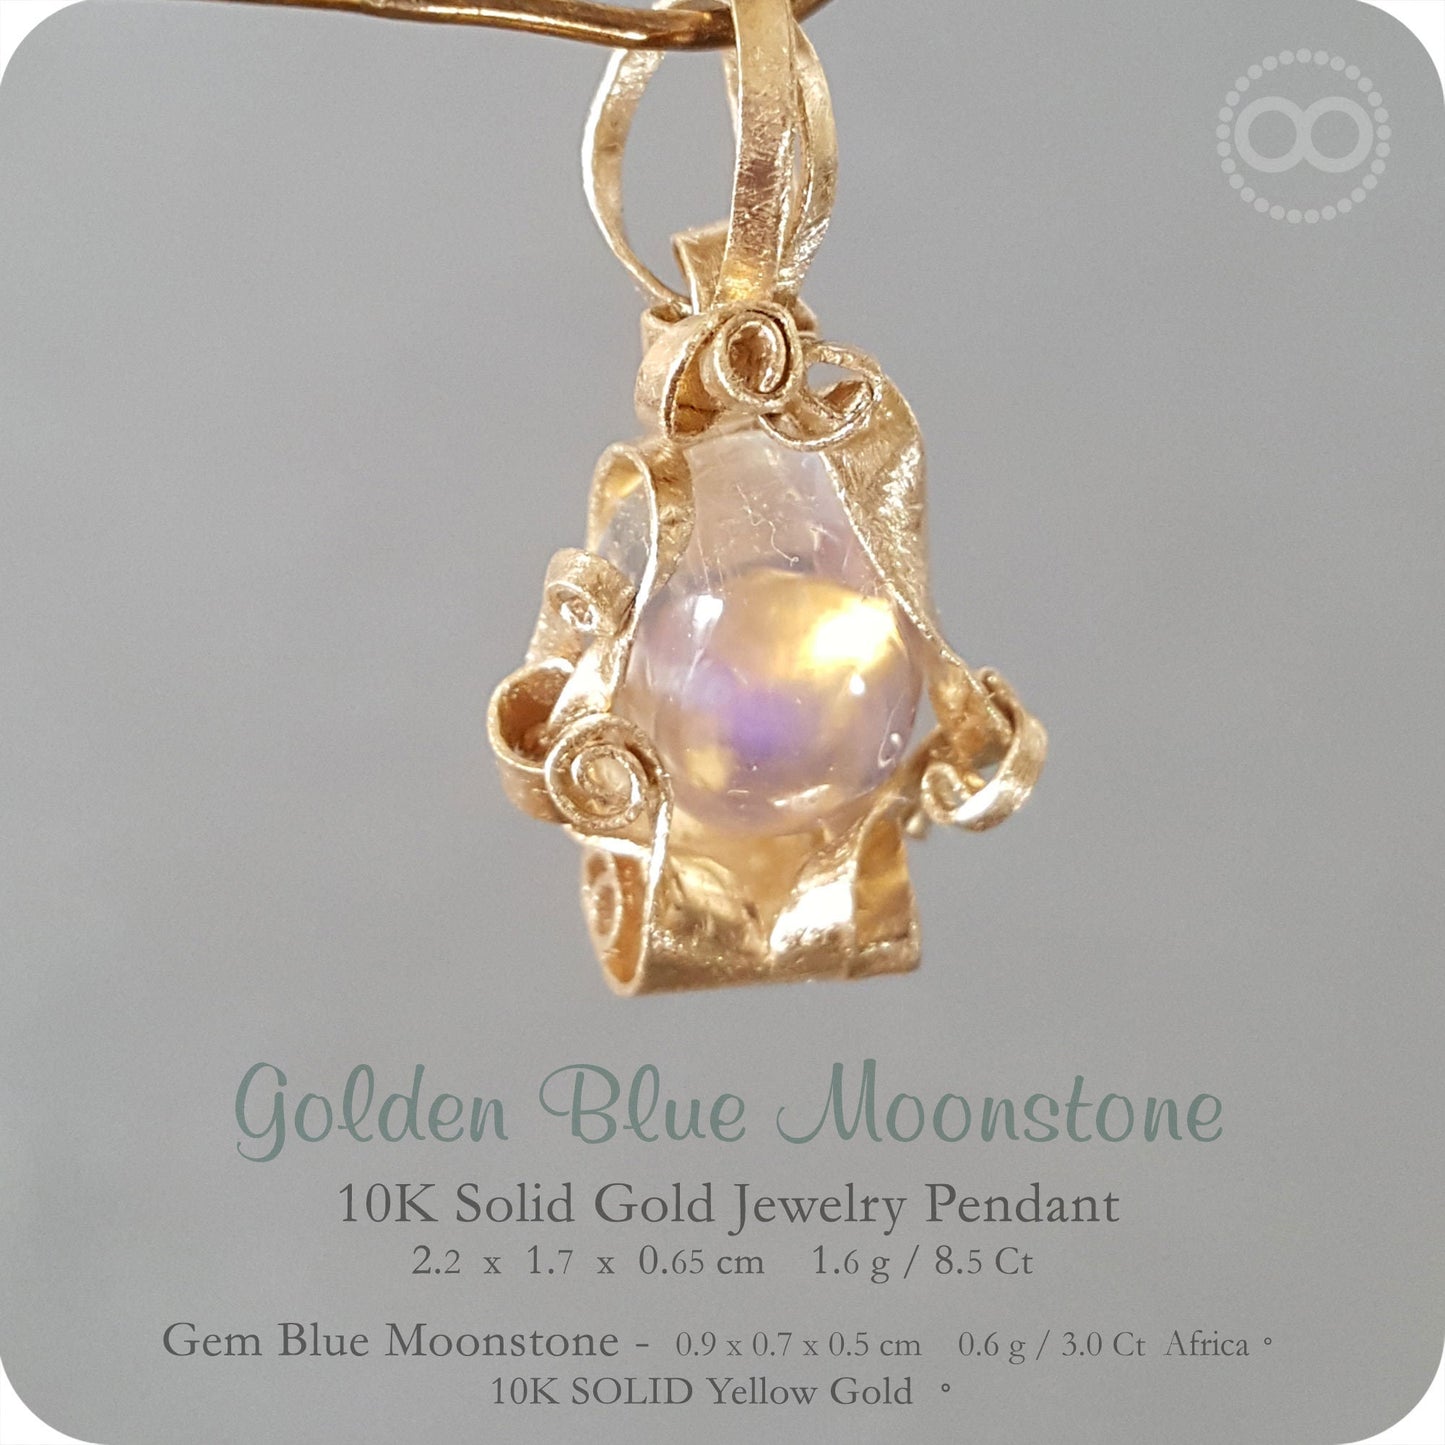 Gem Blue Moonstone 10K SOLID Gold Jewelry Pendant - H143